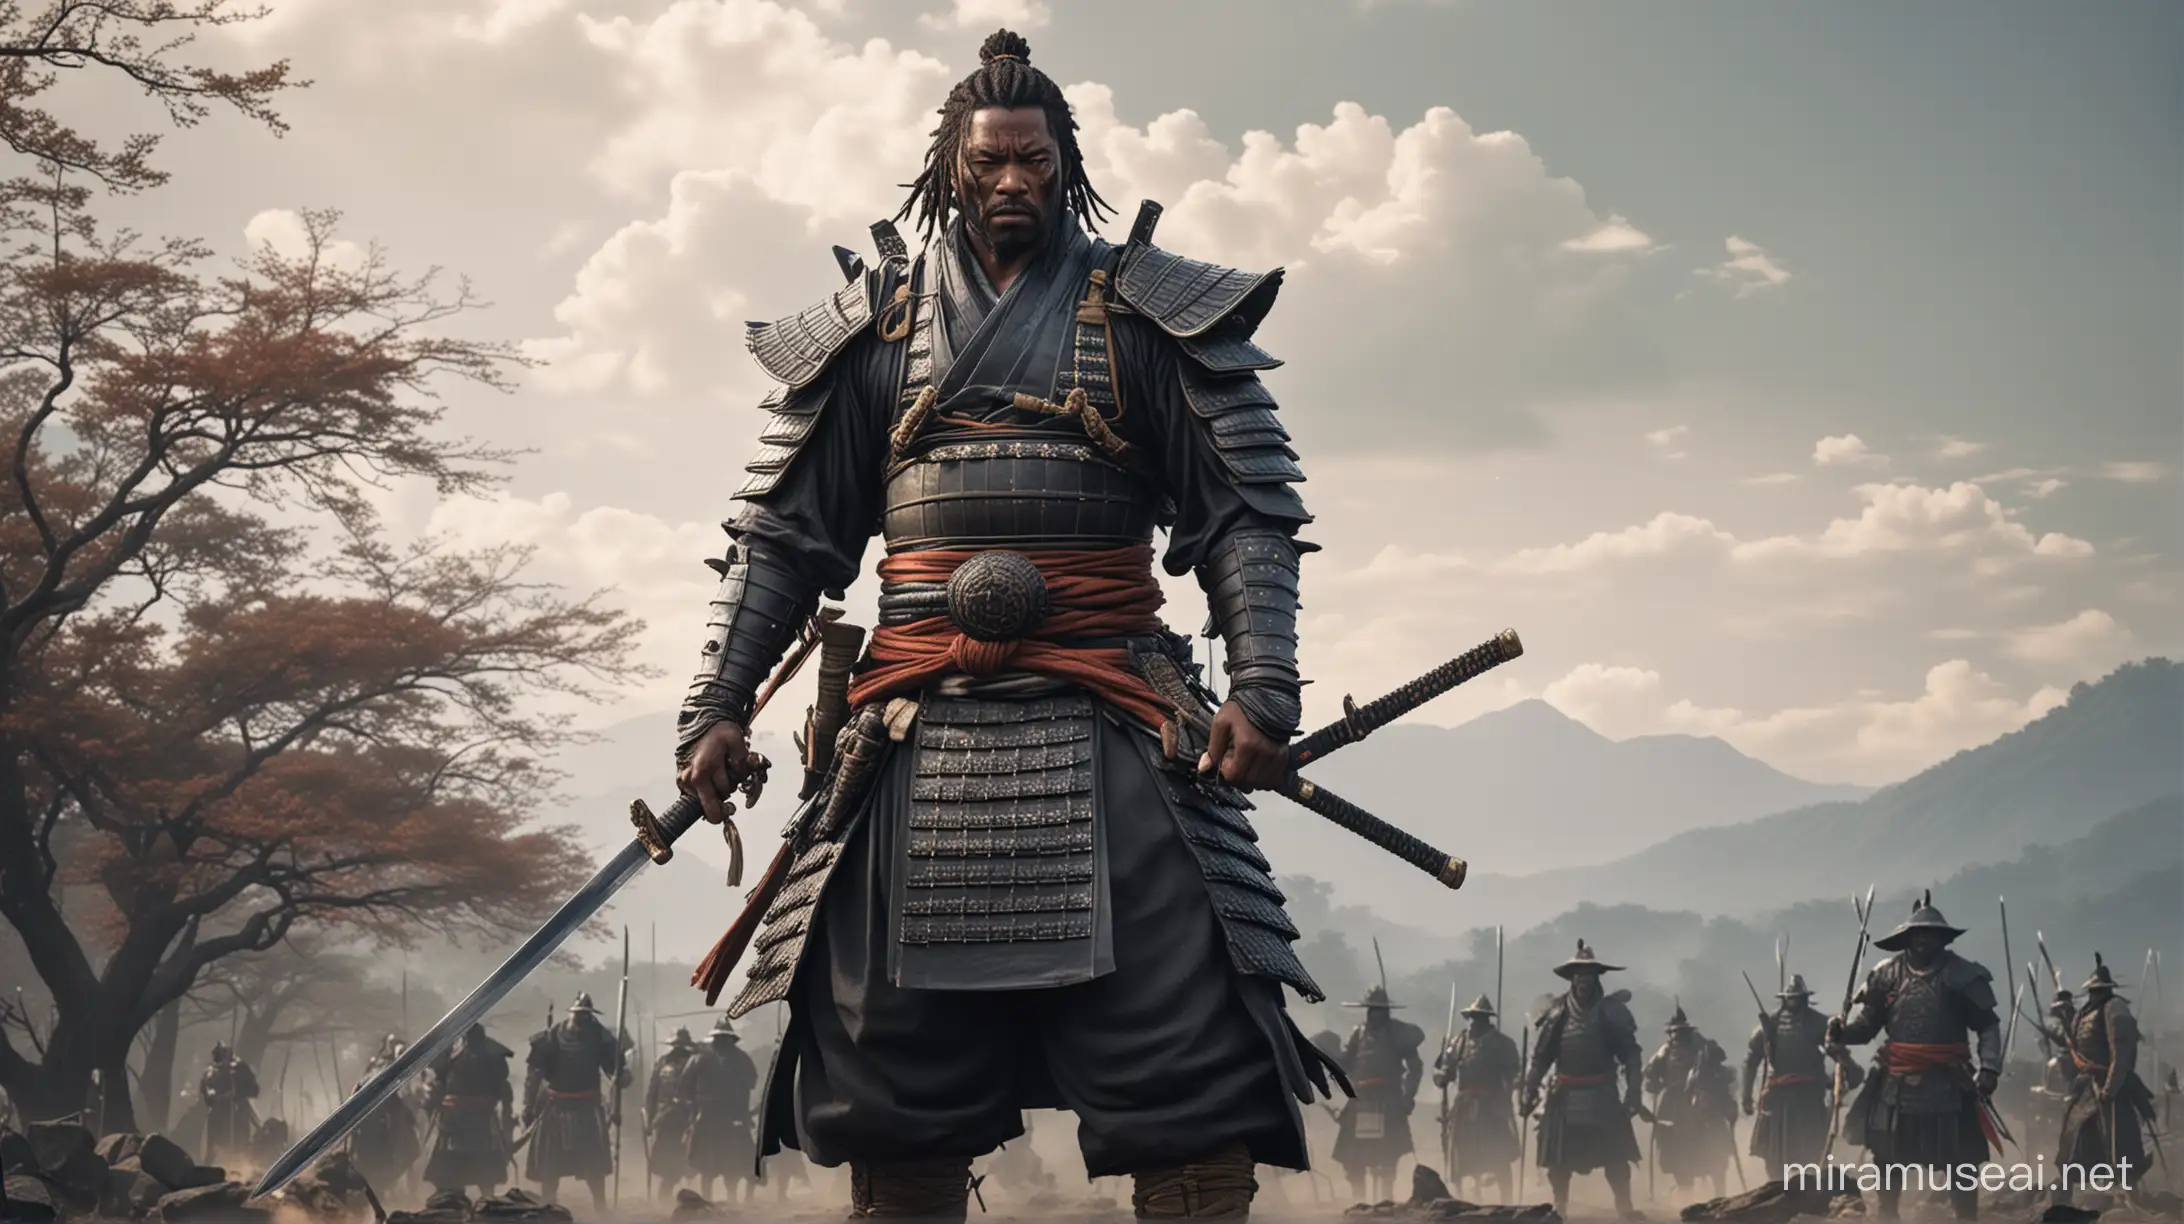 Samurai Yasuke in Battle with Drawn Sword Amidst WarTorn Landscape